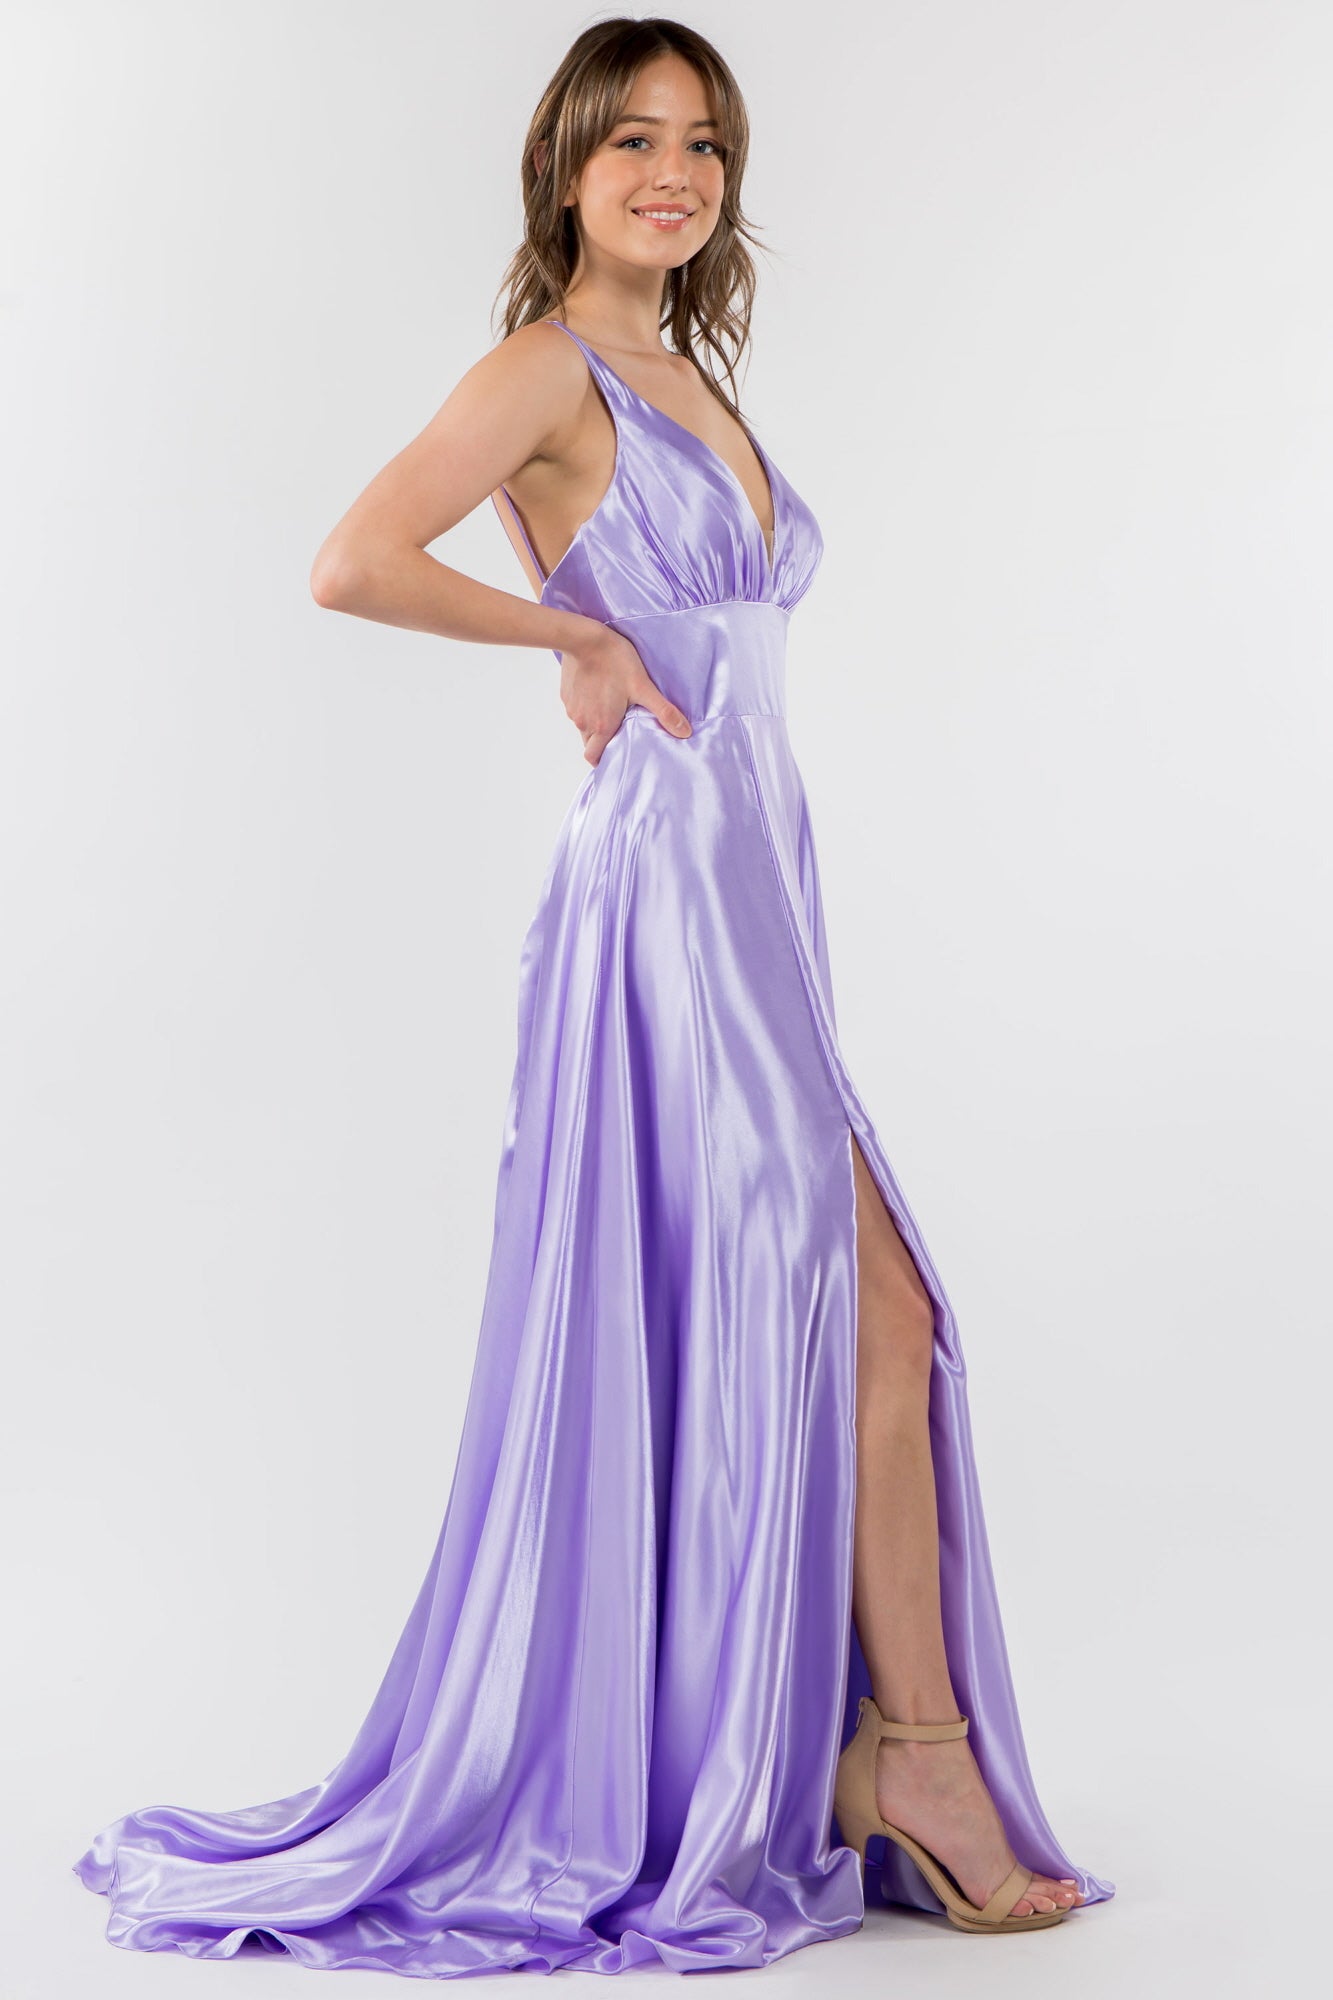 Long Formal Sleeveless Satin Prom Dress - The Dress Outlet Black